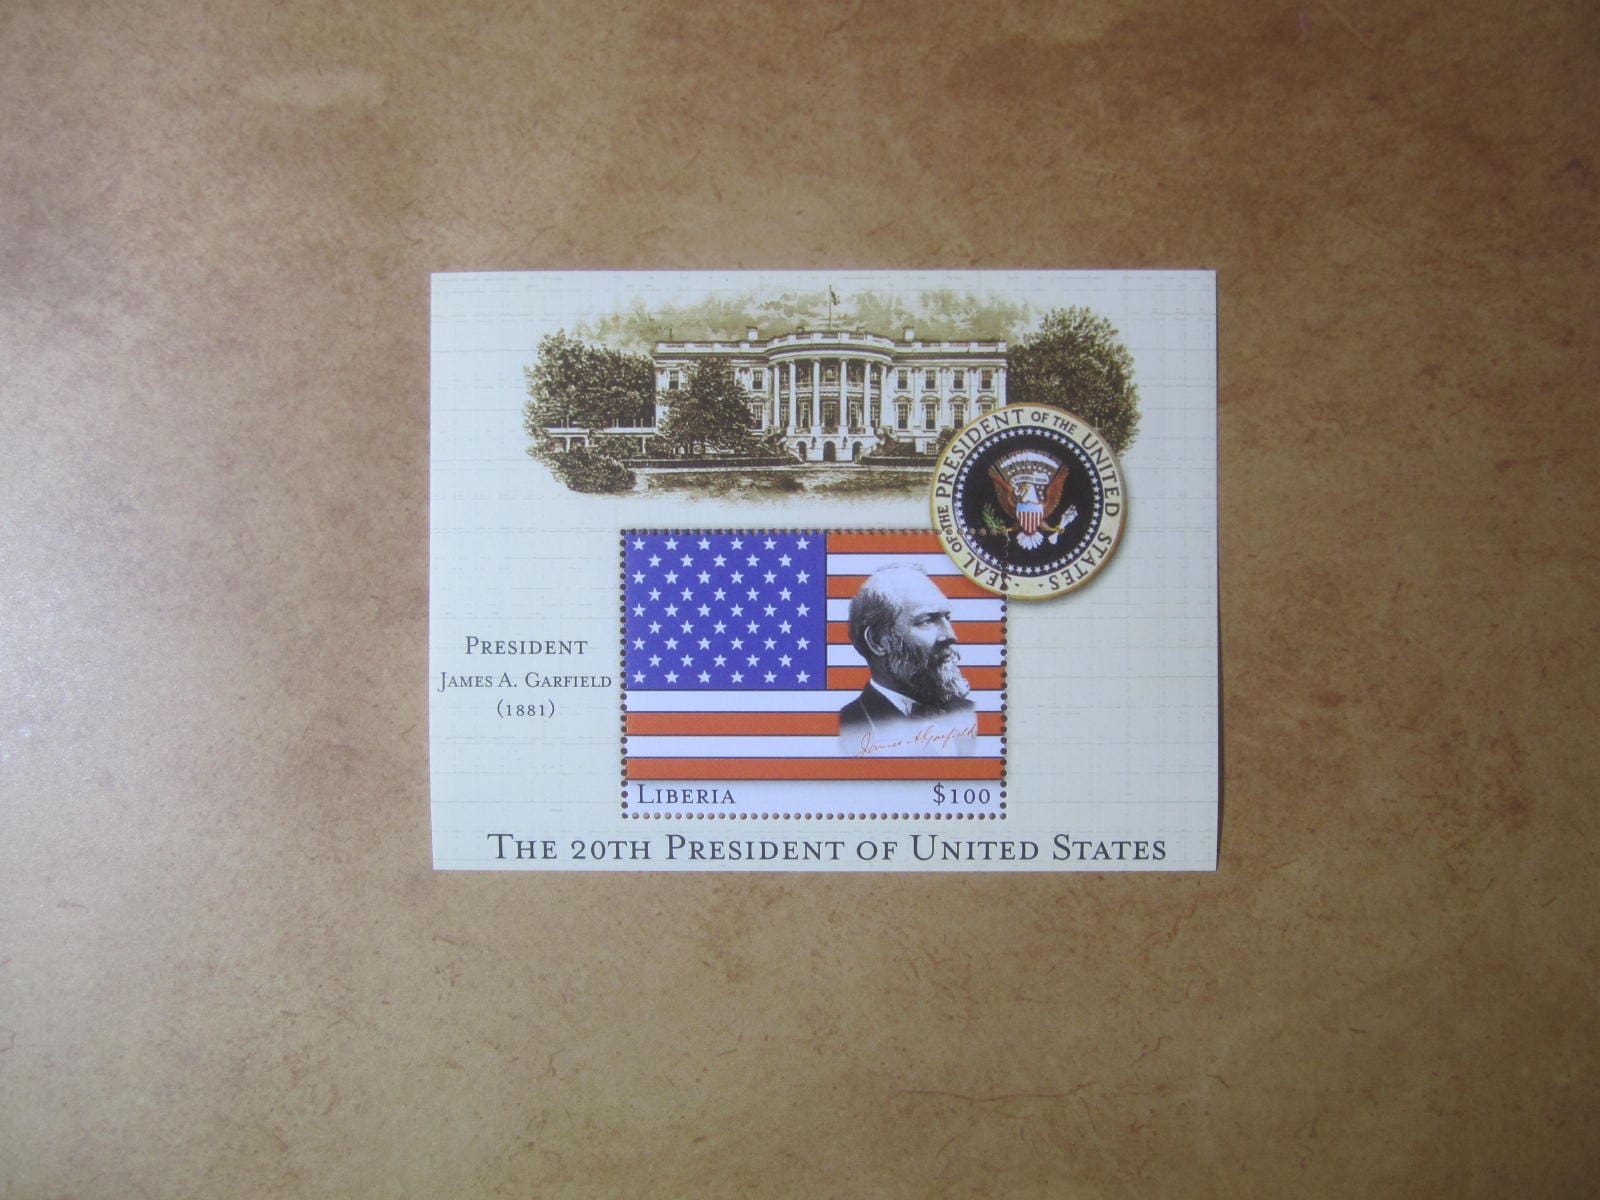 James Garfield Liberia "$100" stamp